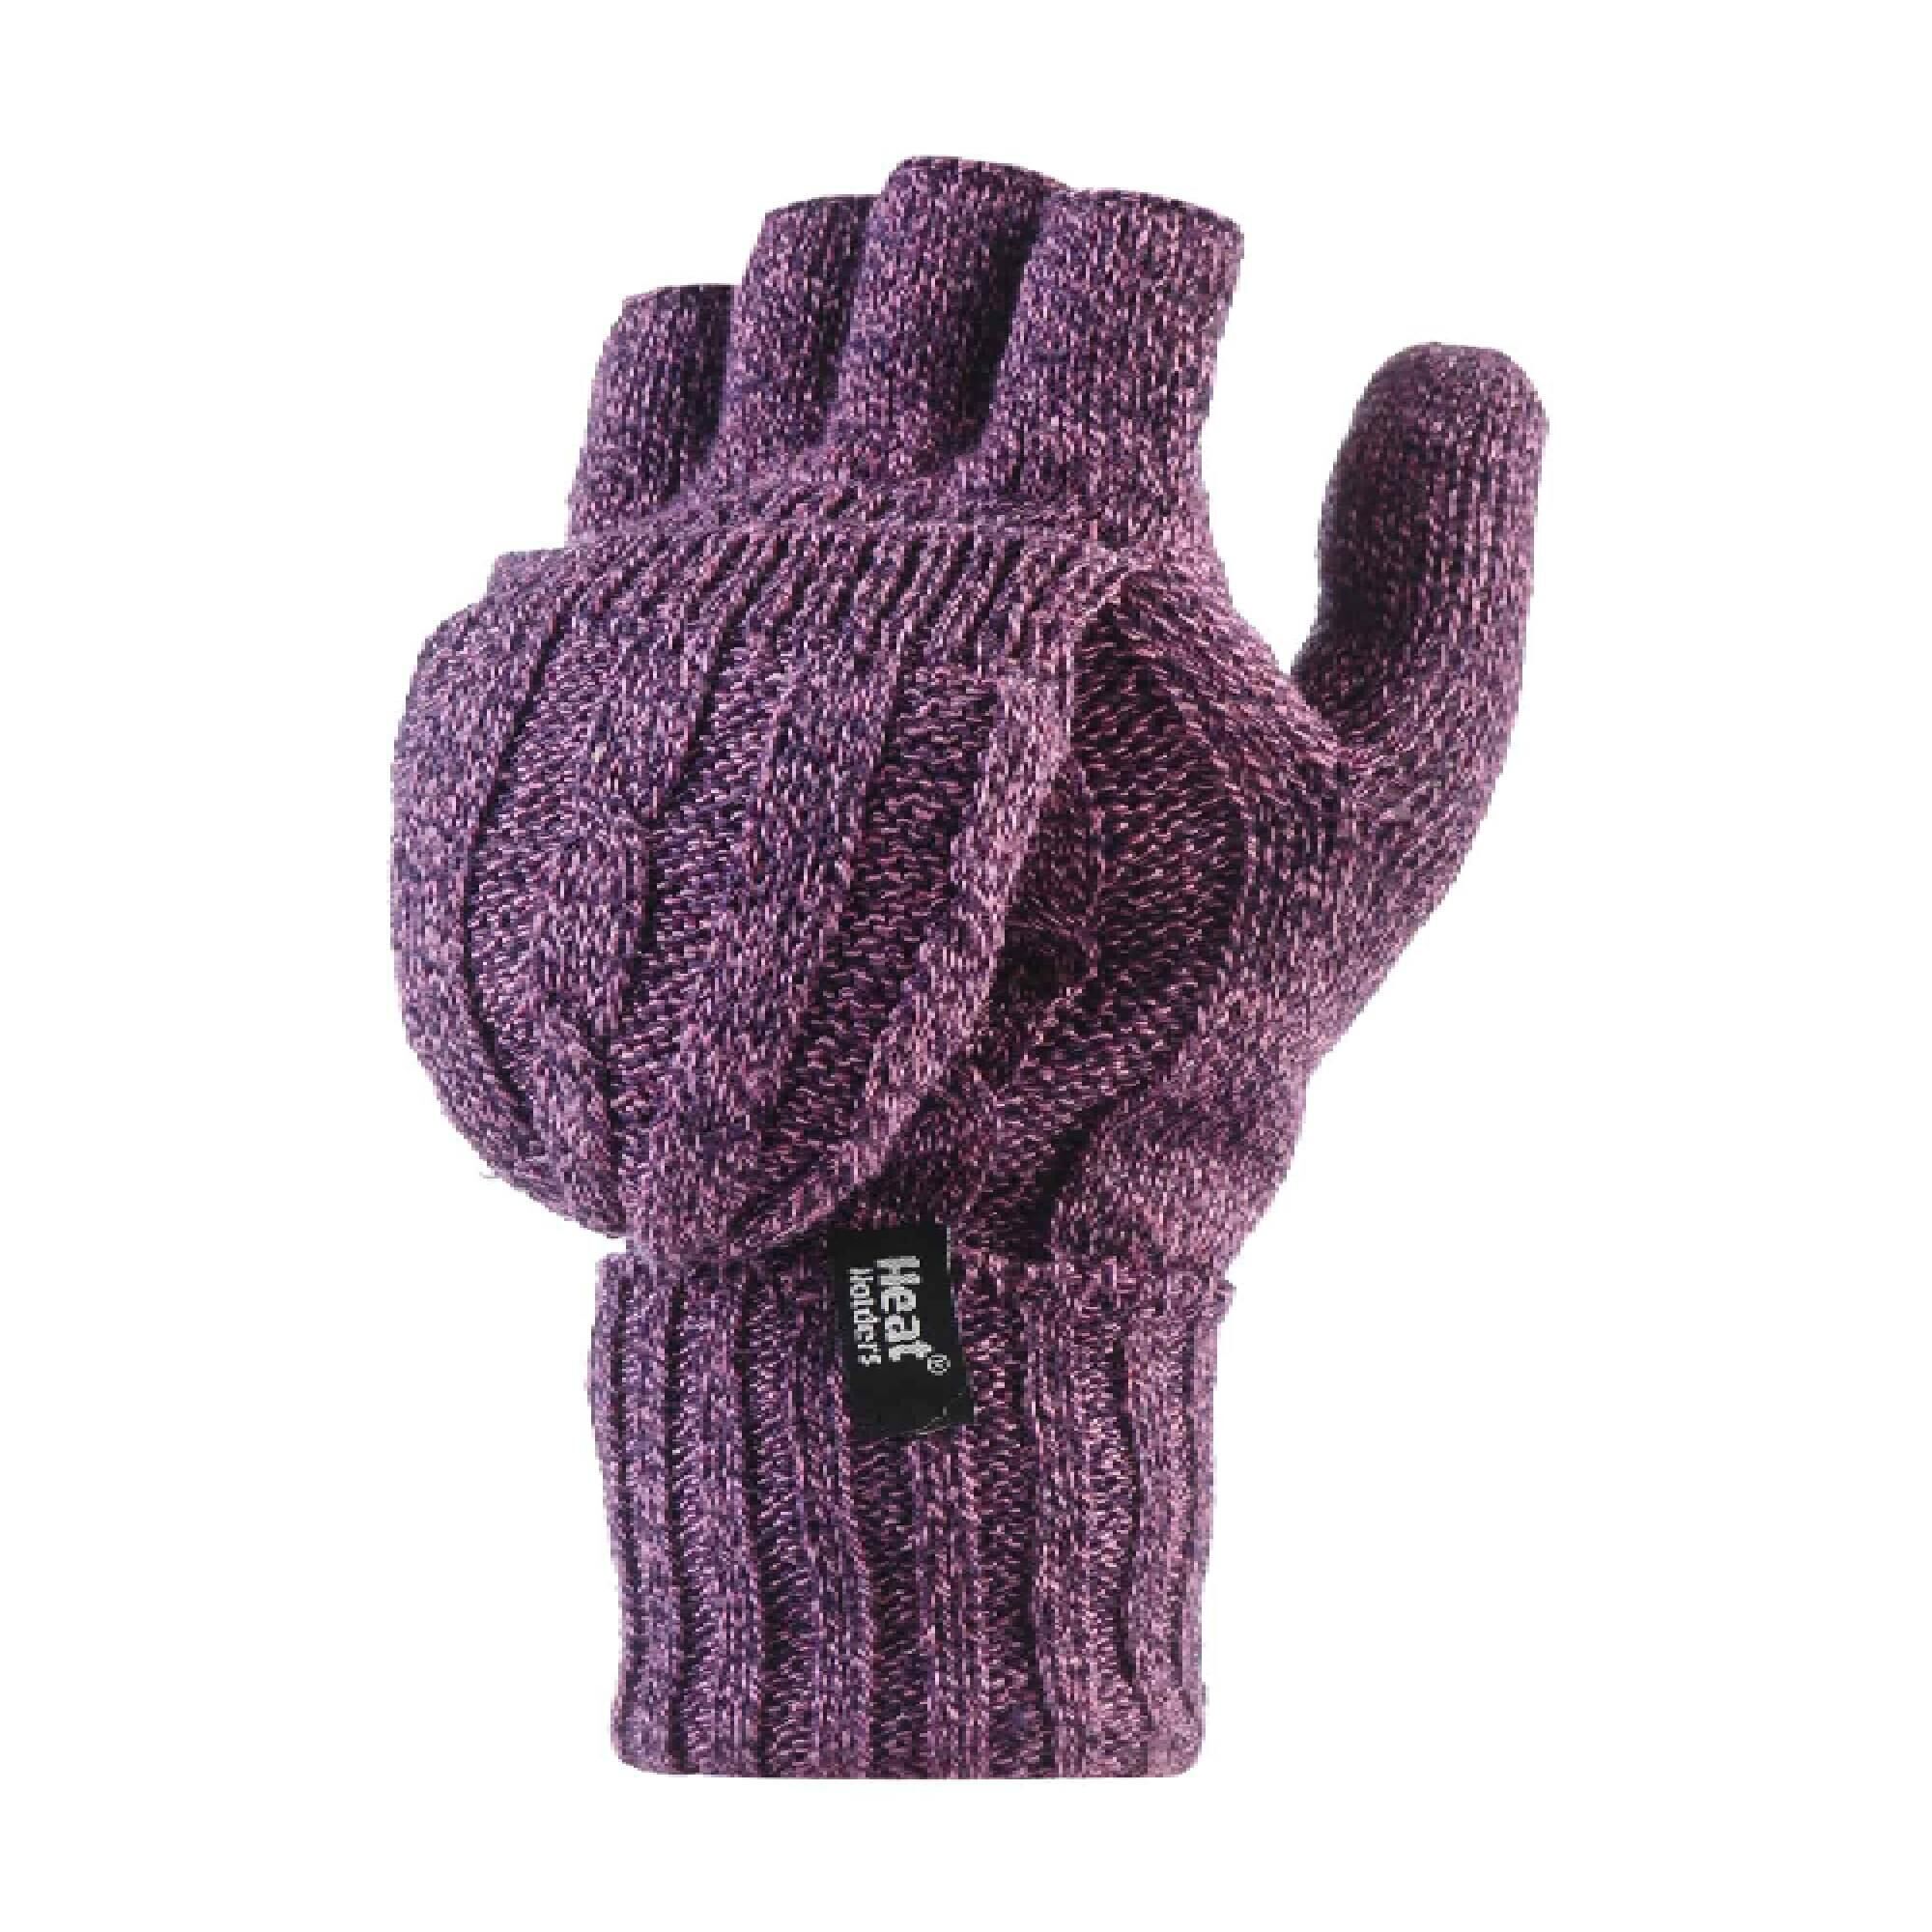 EDZ Merino Wool Fingerless Gloves, Black, Small 